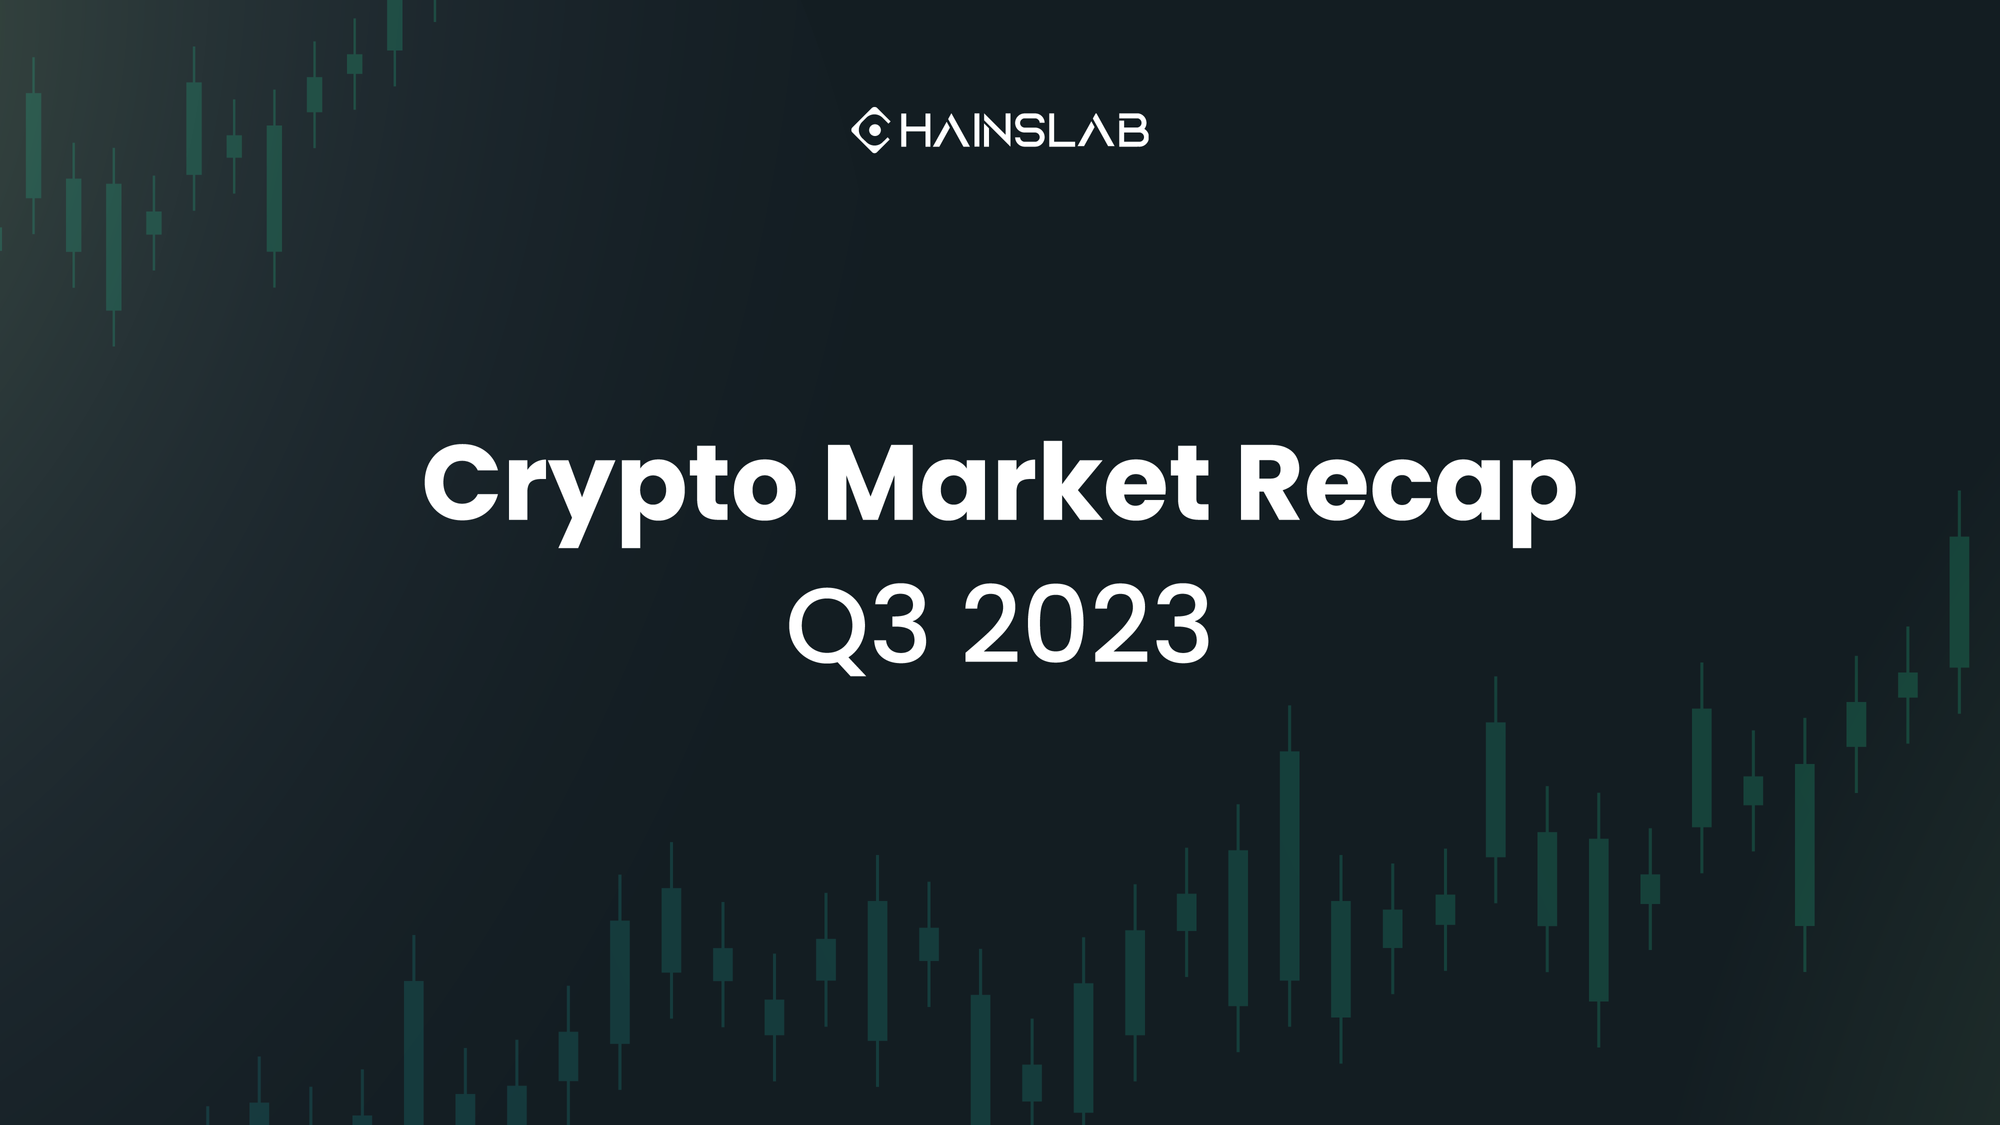 Q3 2023 Crypto Market Recap - The Calm Before the Storm?